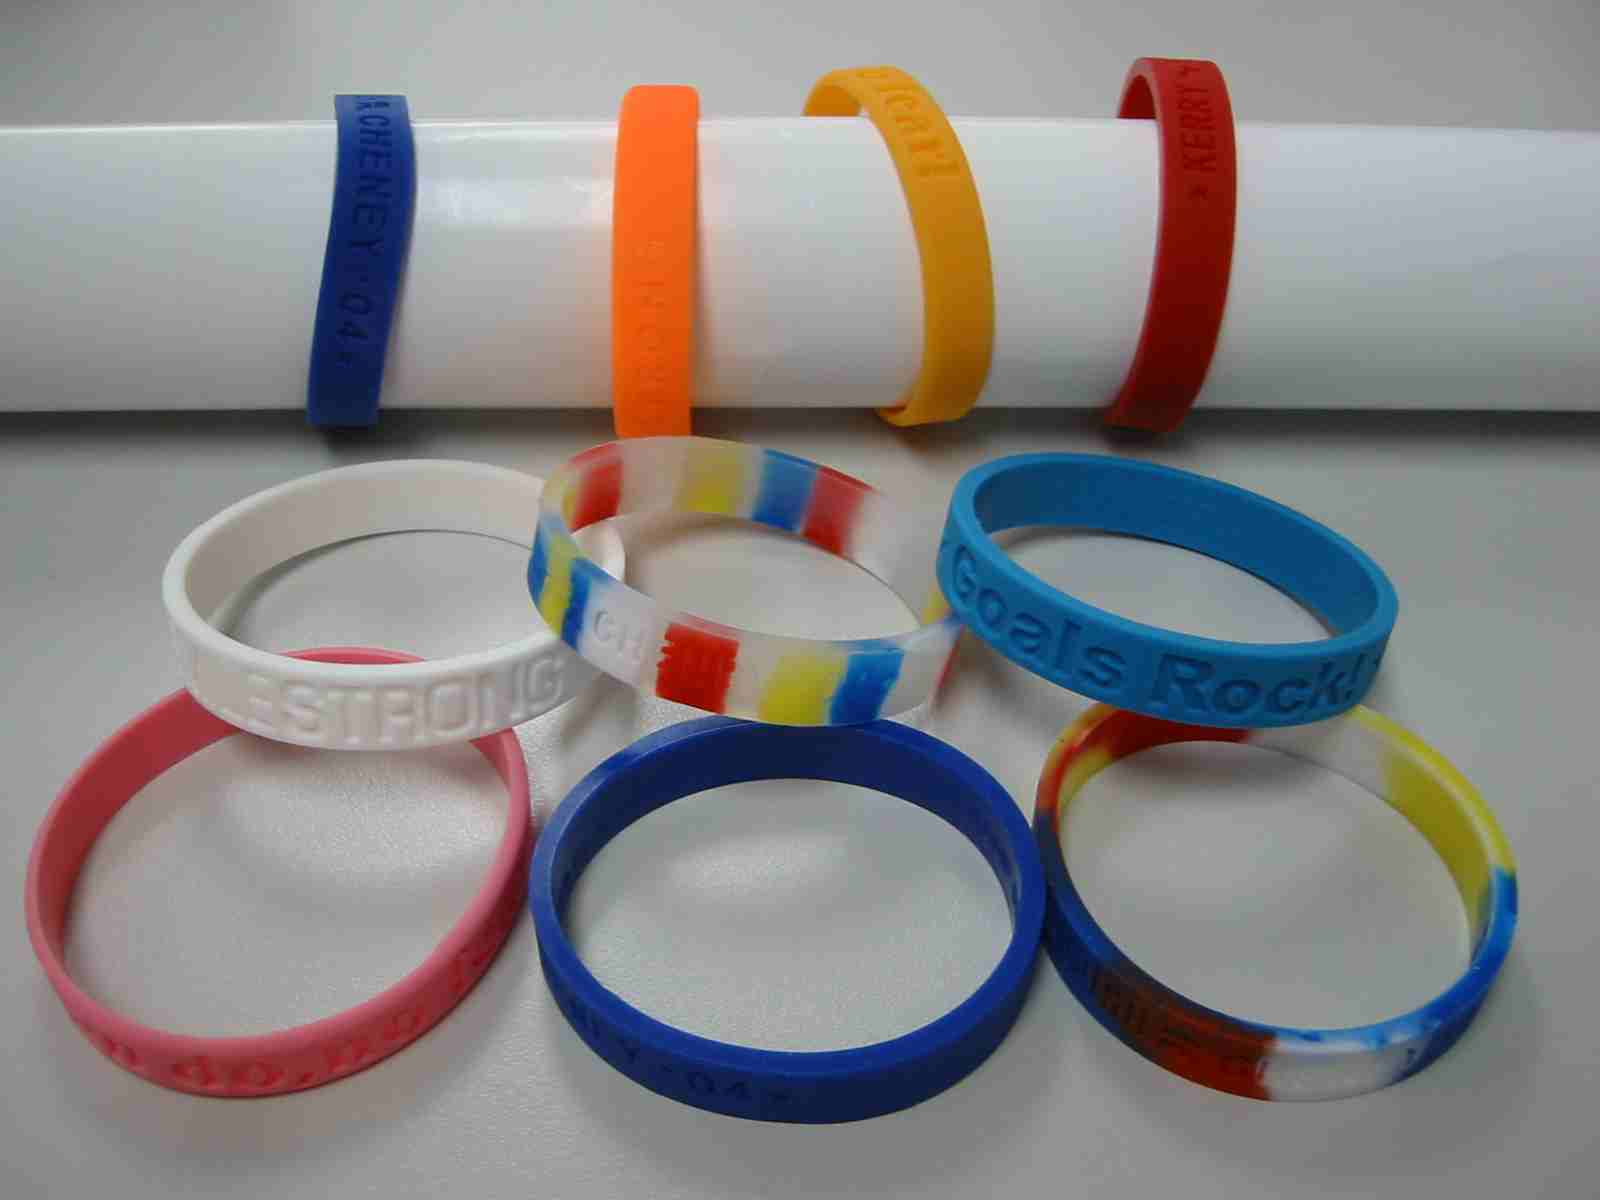 Silicon Rubber Wrist Bands